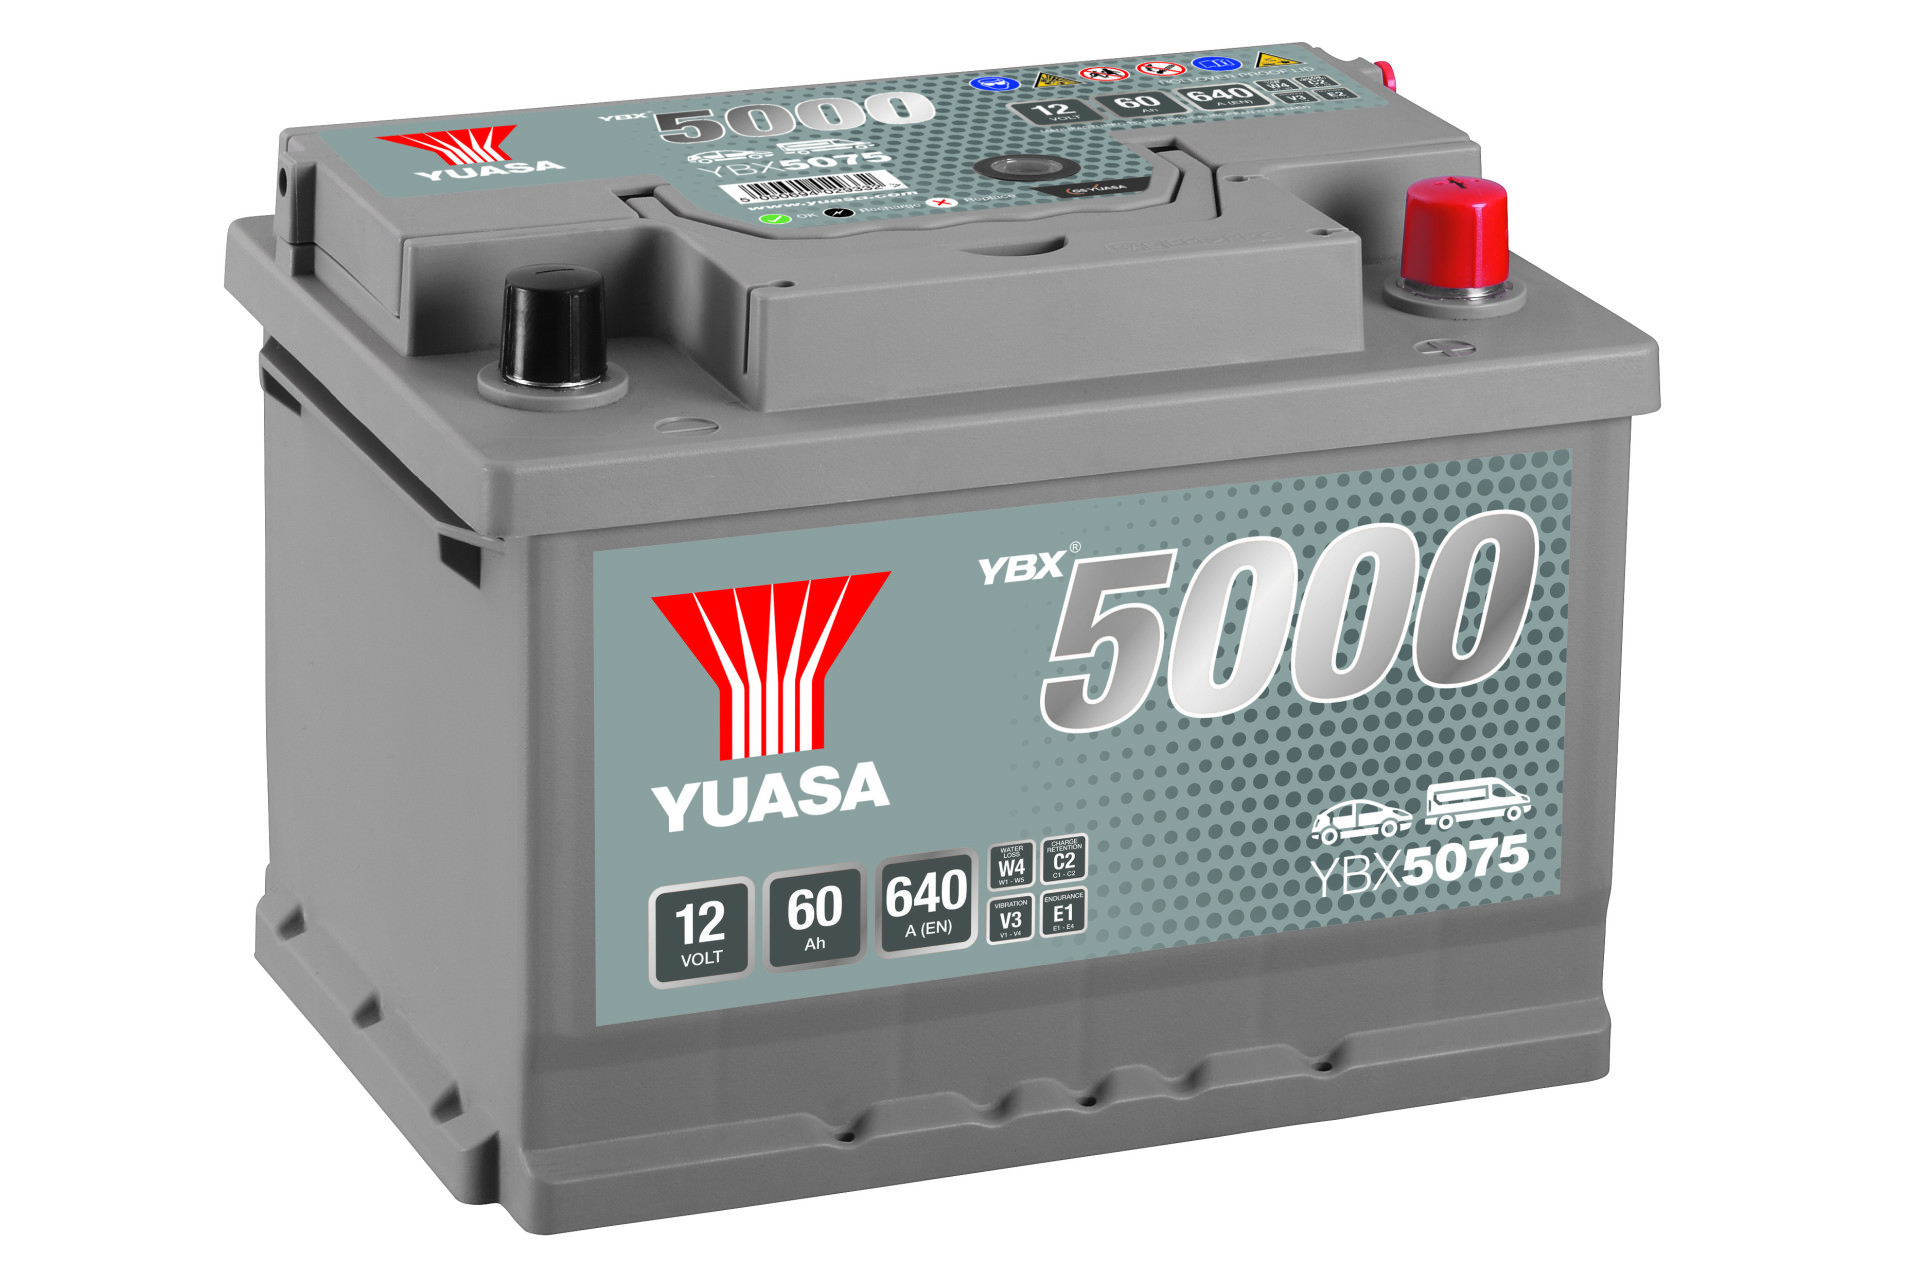 YUASA Autobatterie, Starterbatterie 12V 60Ah 640A 3.38L